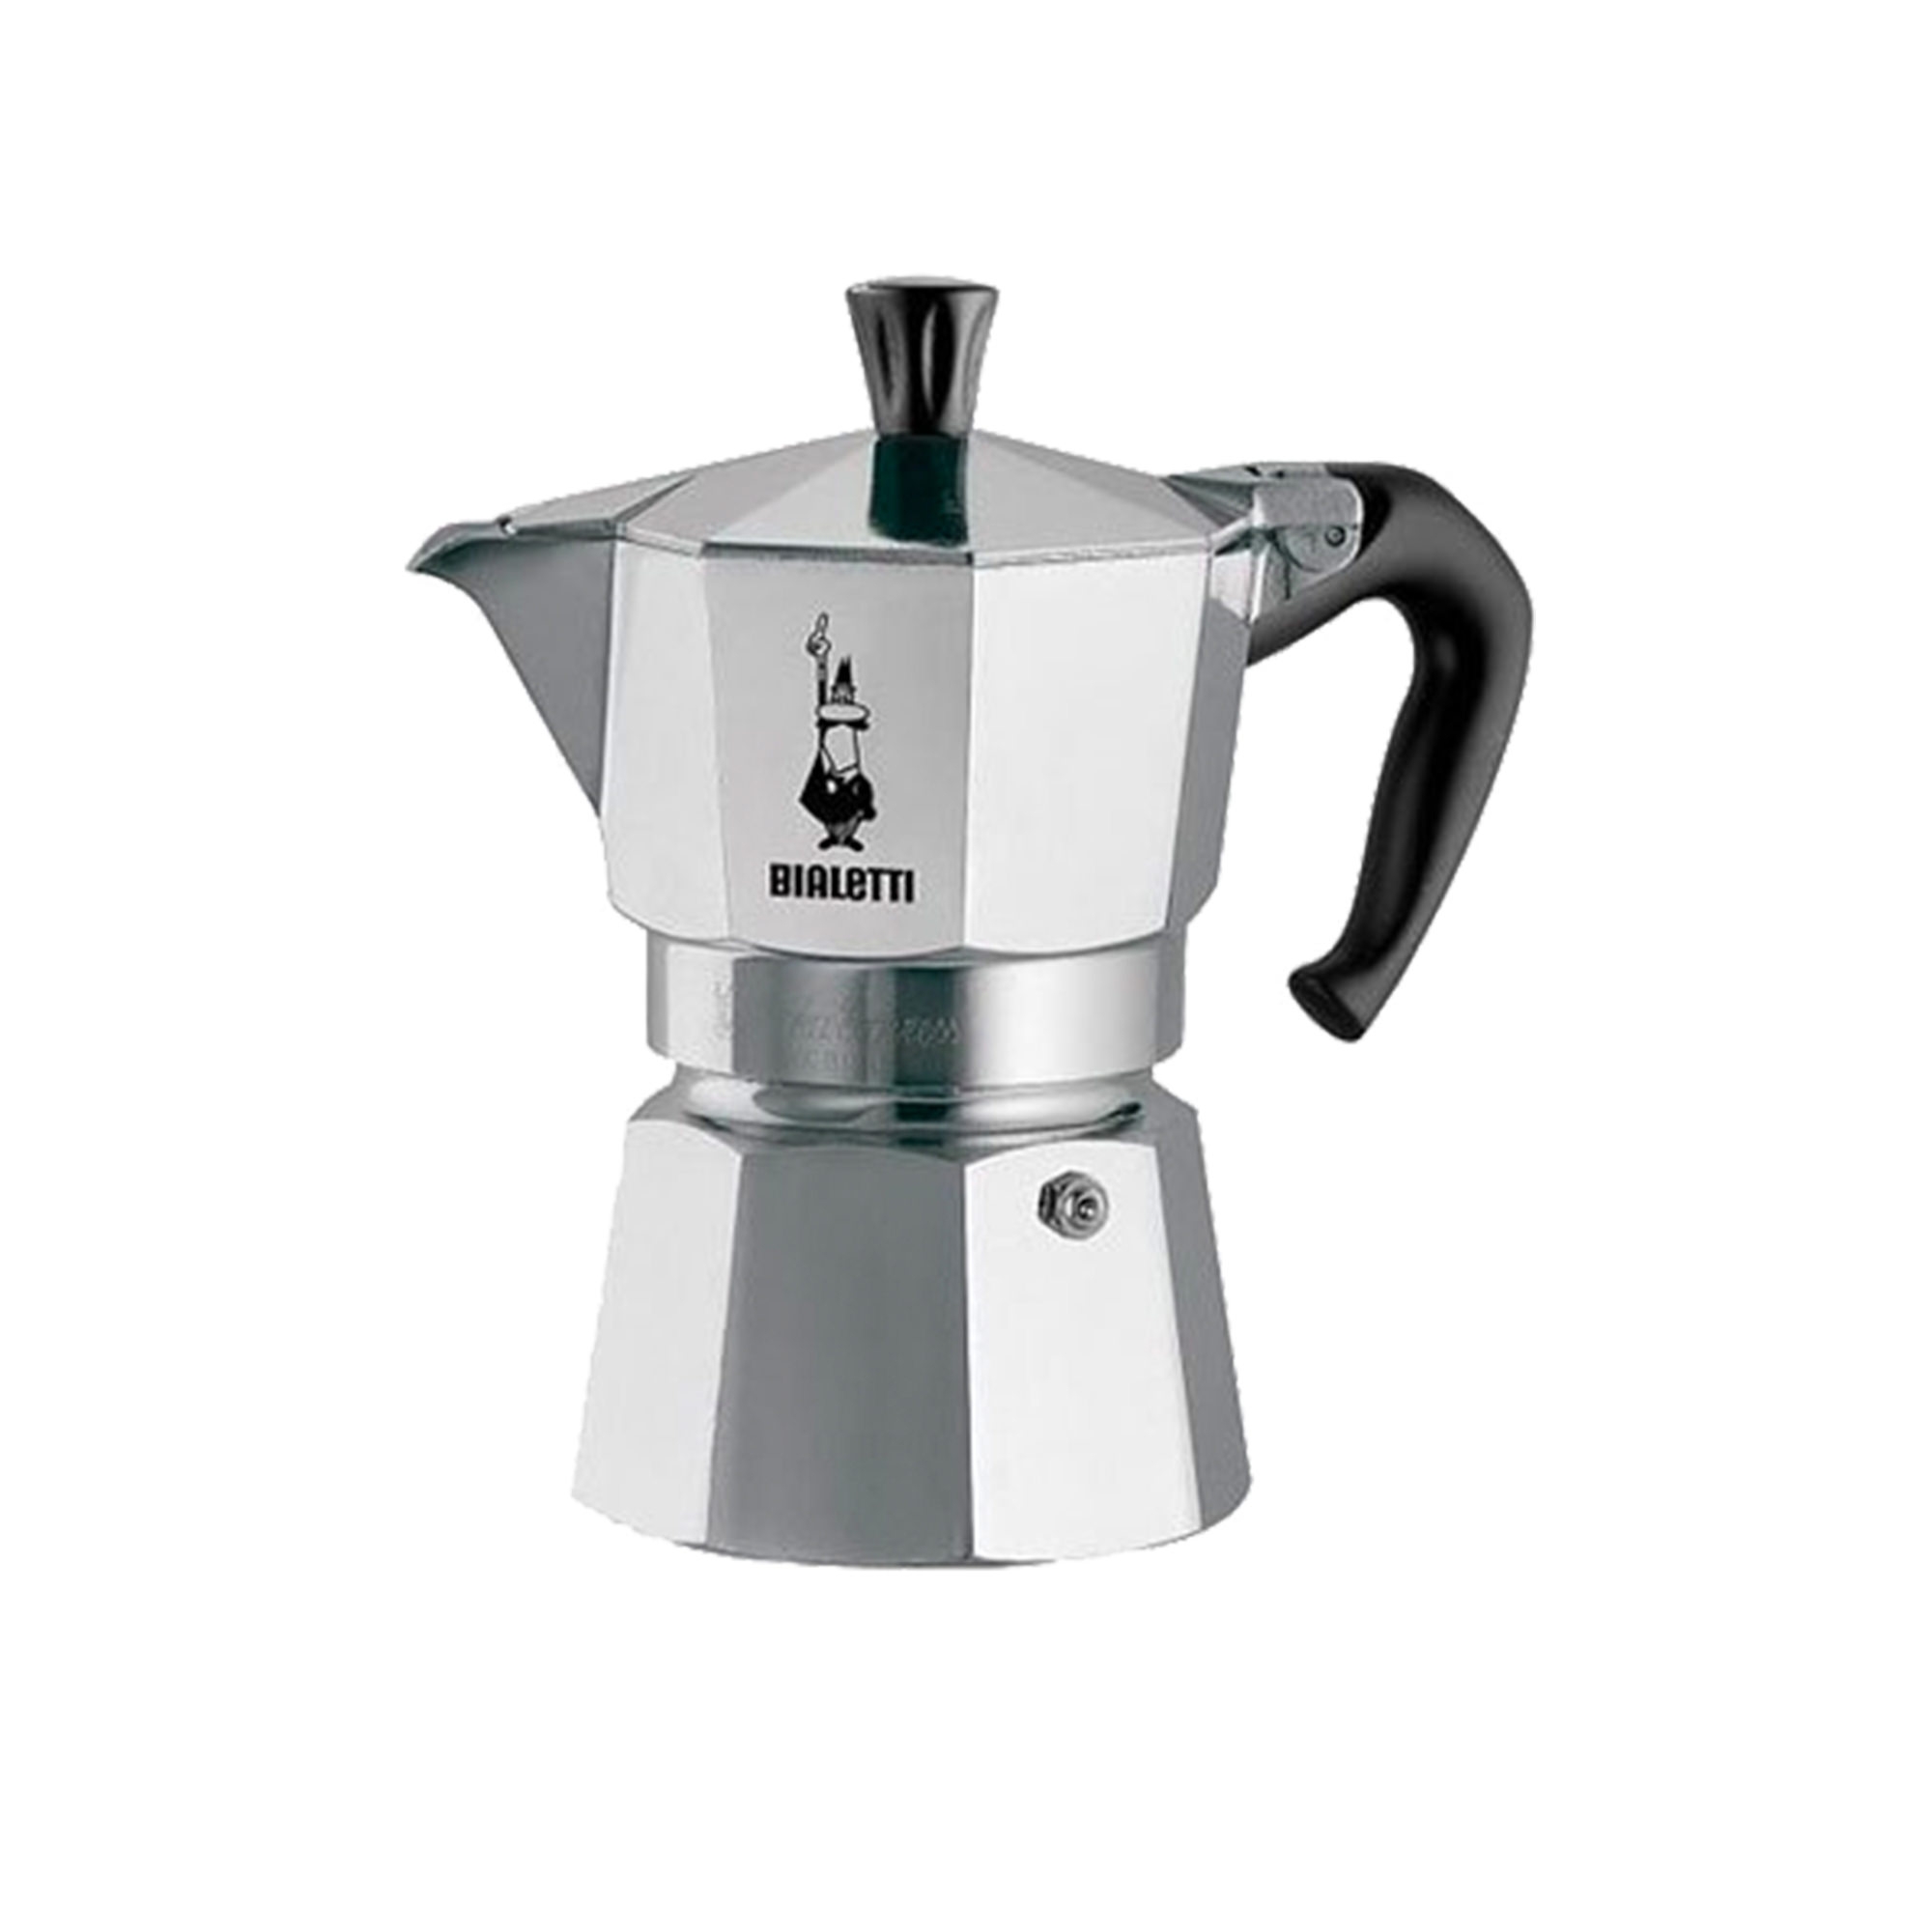 Bialetti Moka Express Stovetop Espresso Maker 3 Cup Image 1